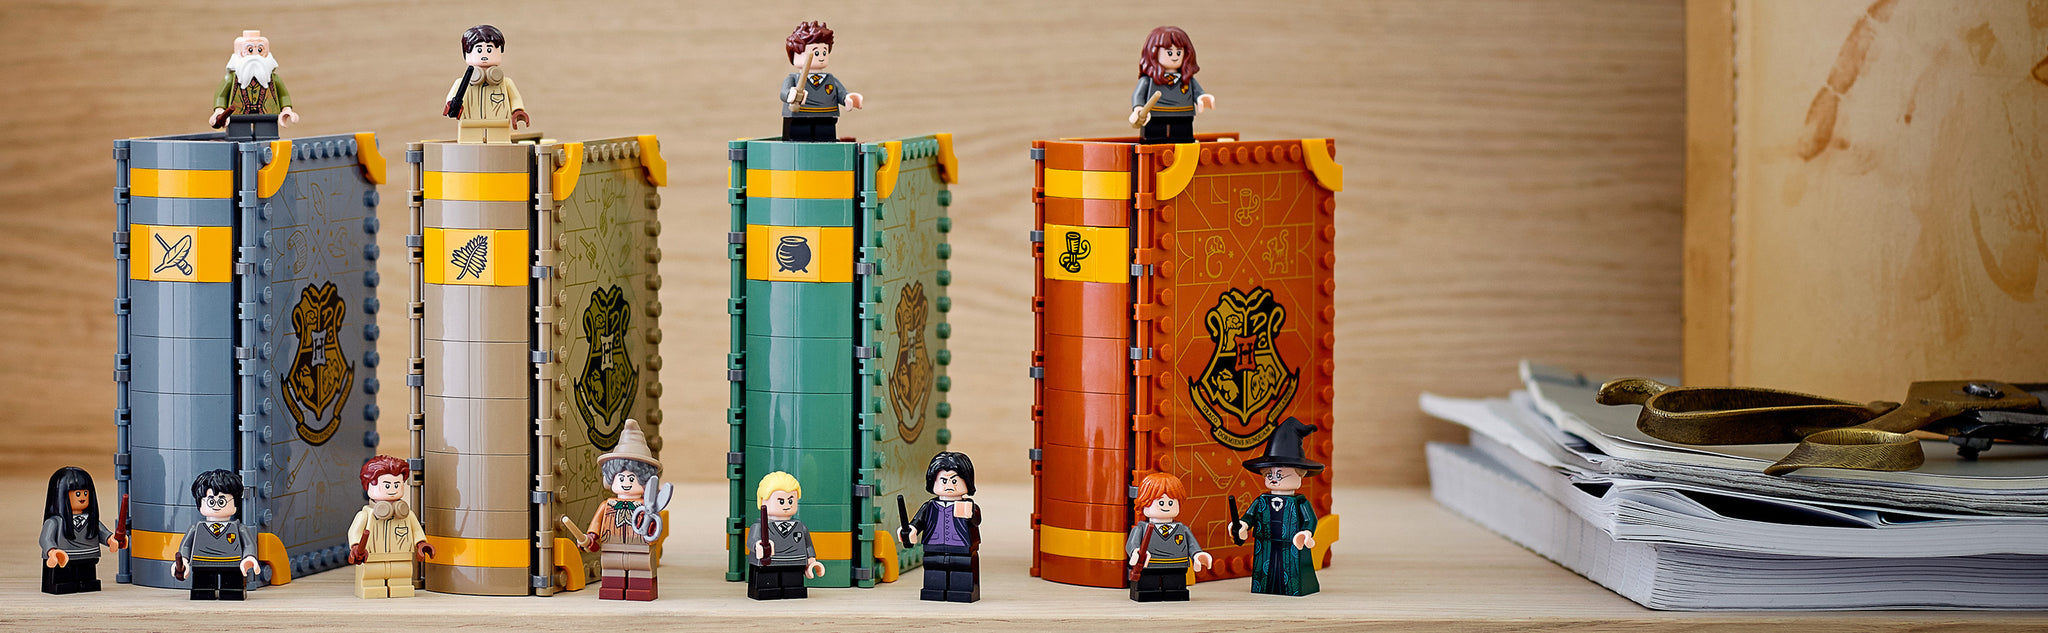 LEGO Harry Potter books